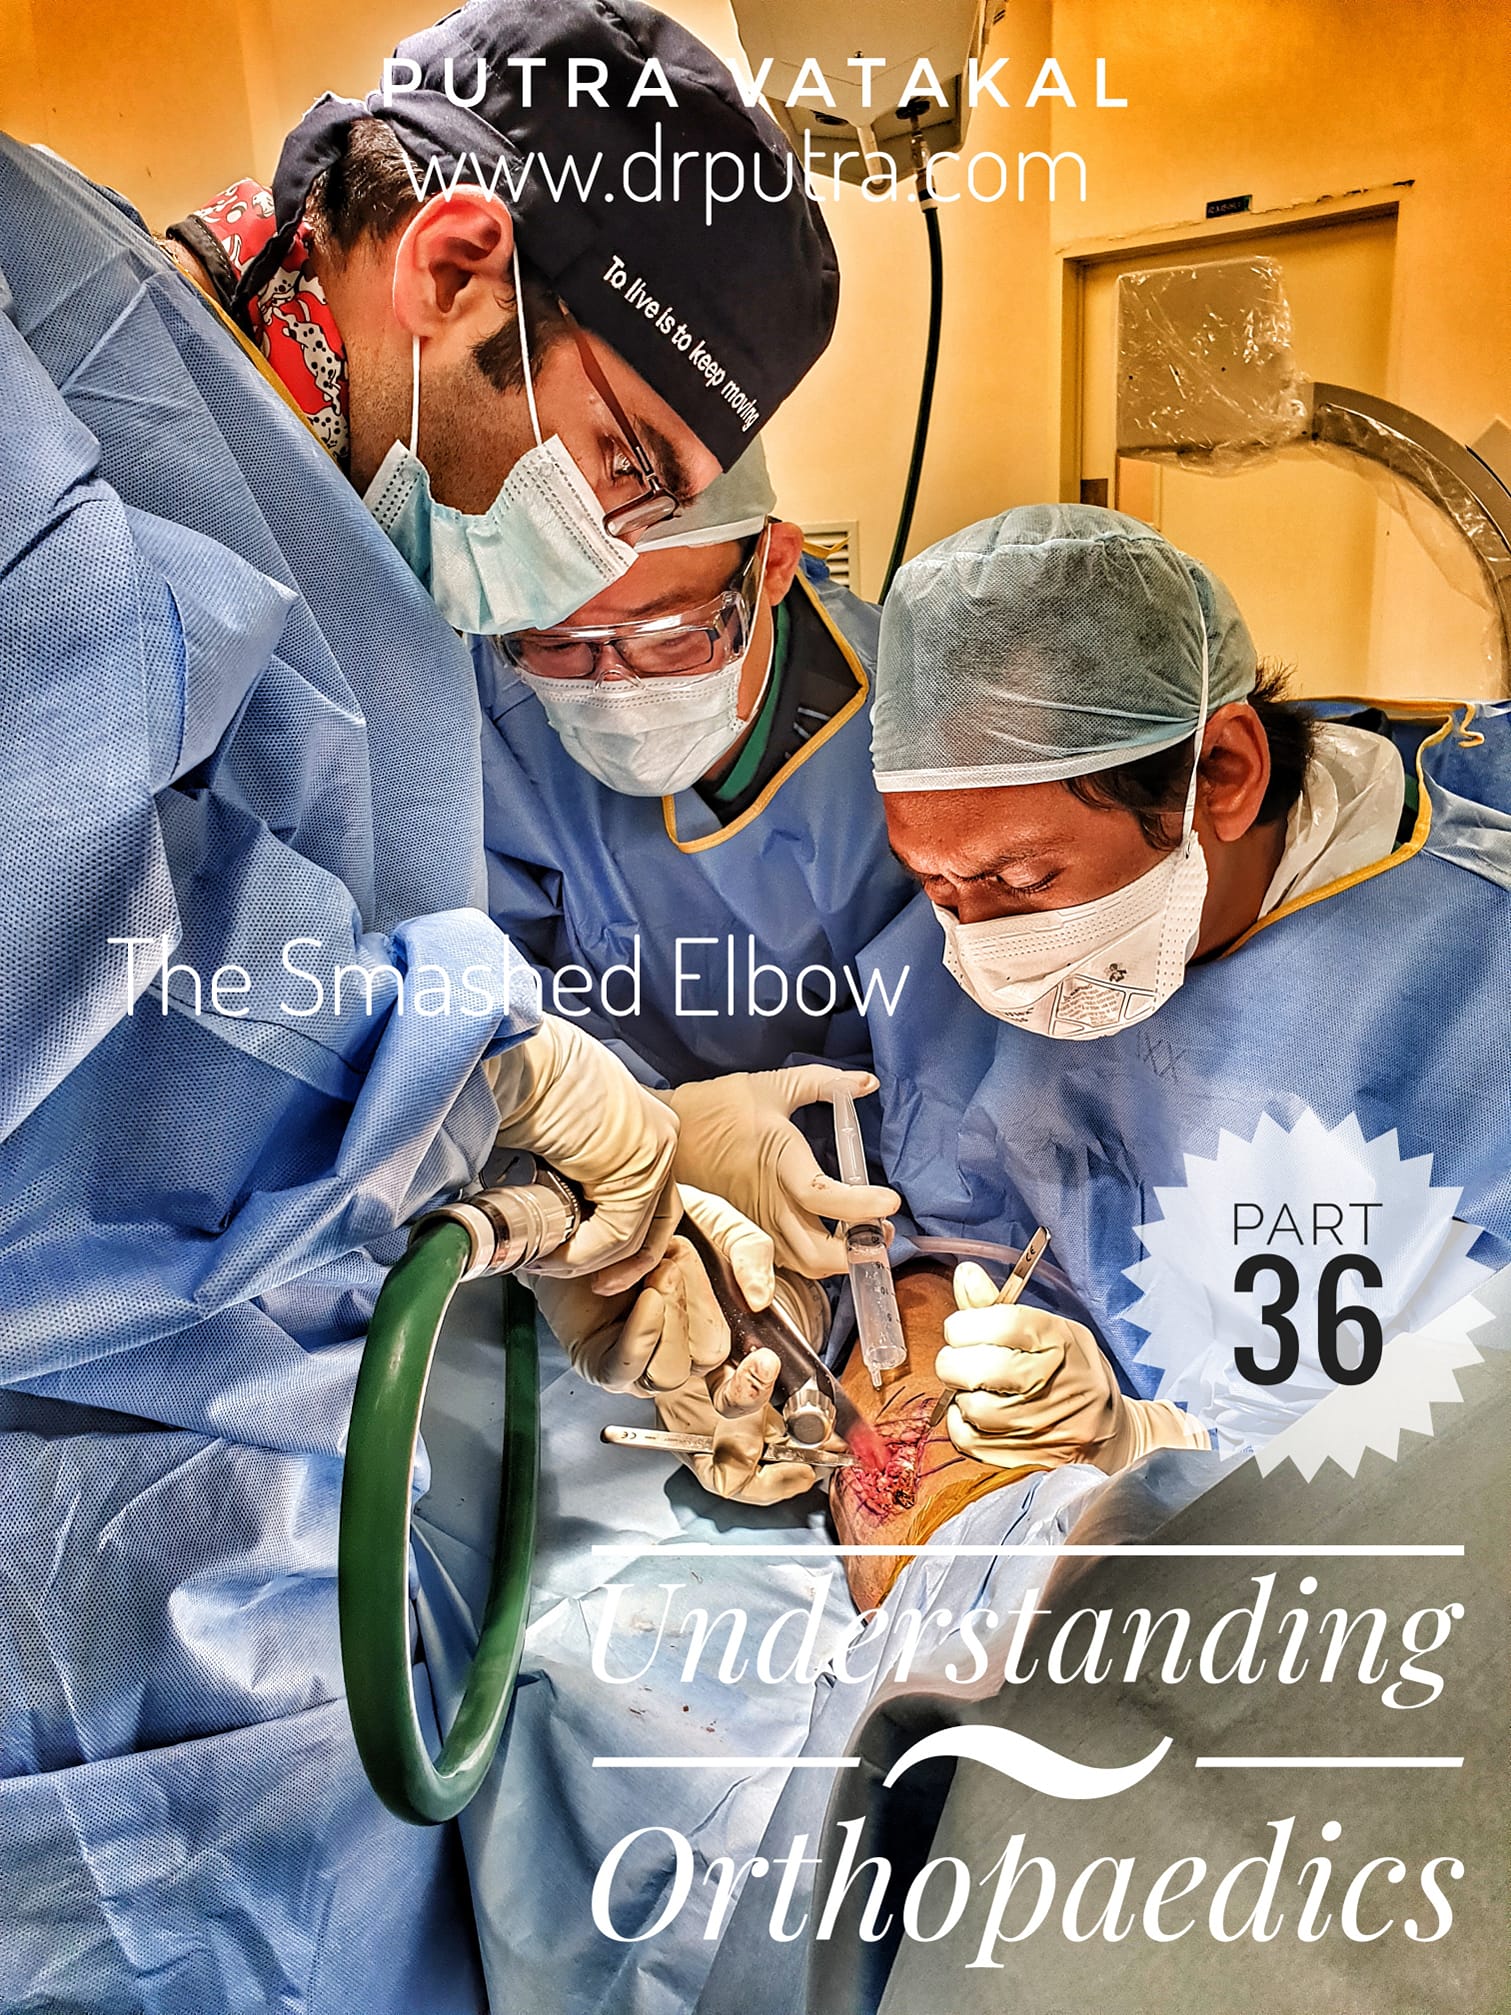 dr putra vatakal, orthopaedic surgeon, kuala lumpur, selangor, elbow fracture